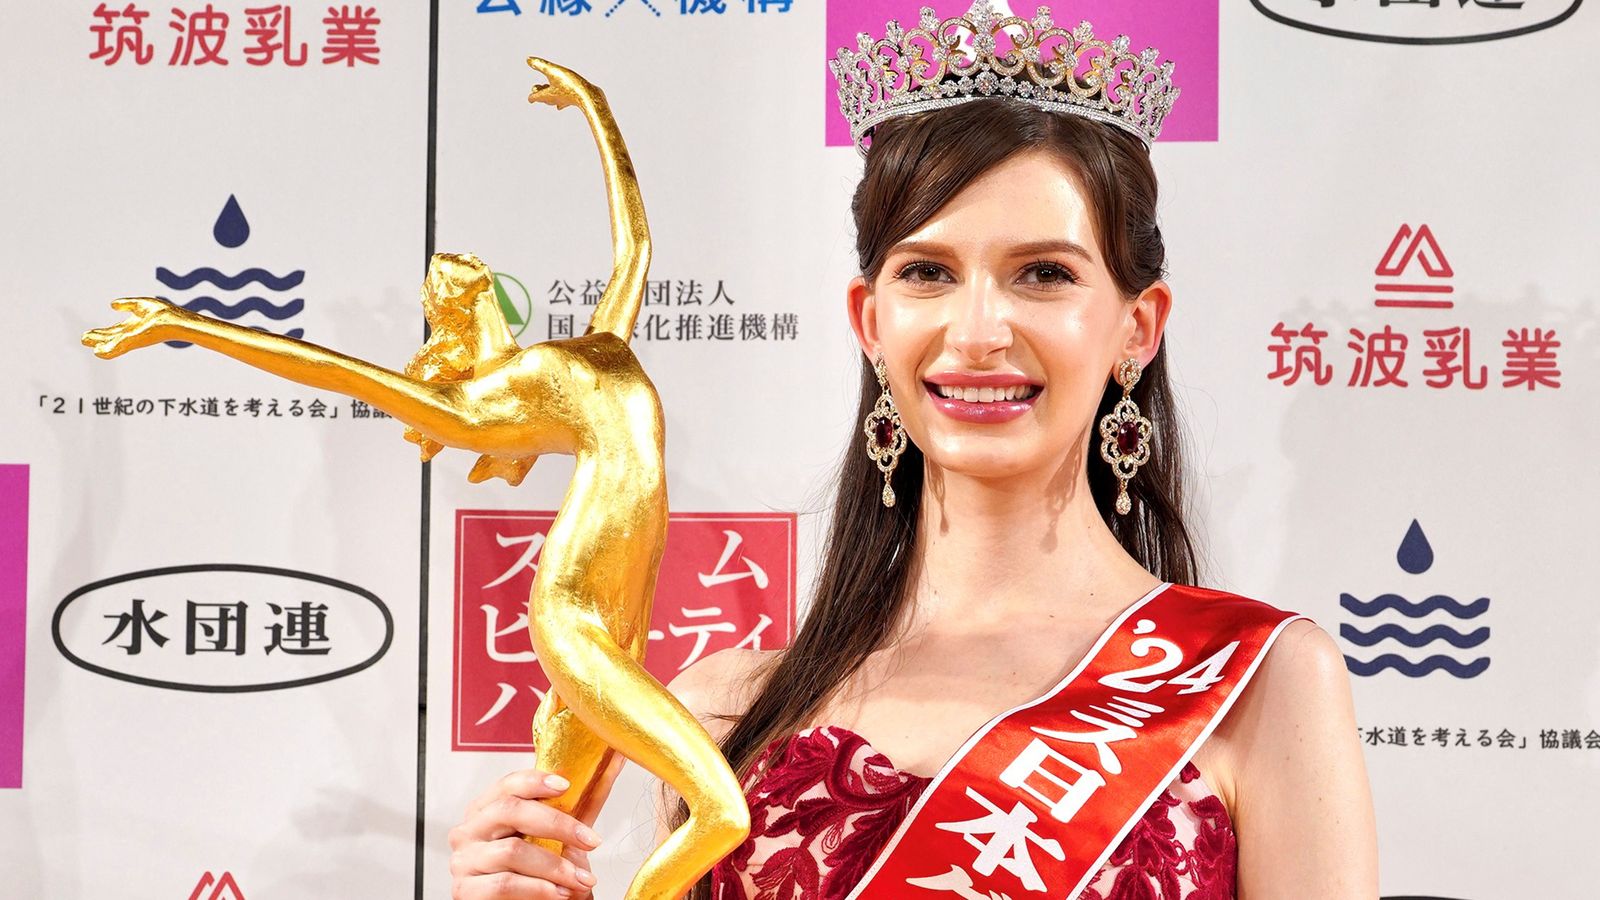 Ukraine-born Miss Japan winner hands back crown over affair with married man | World News